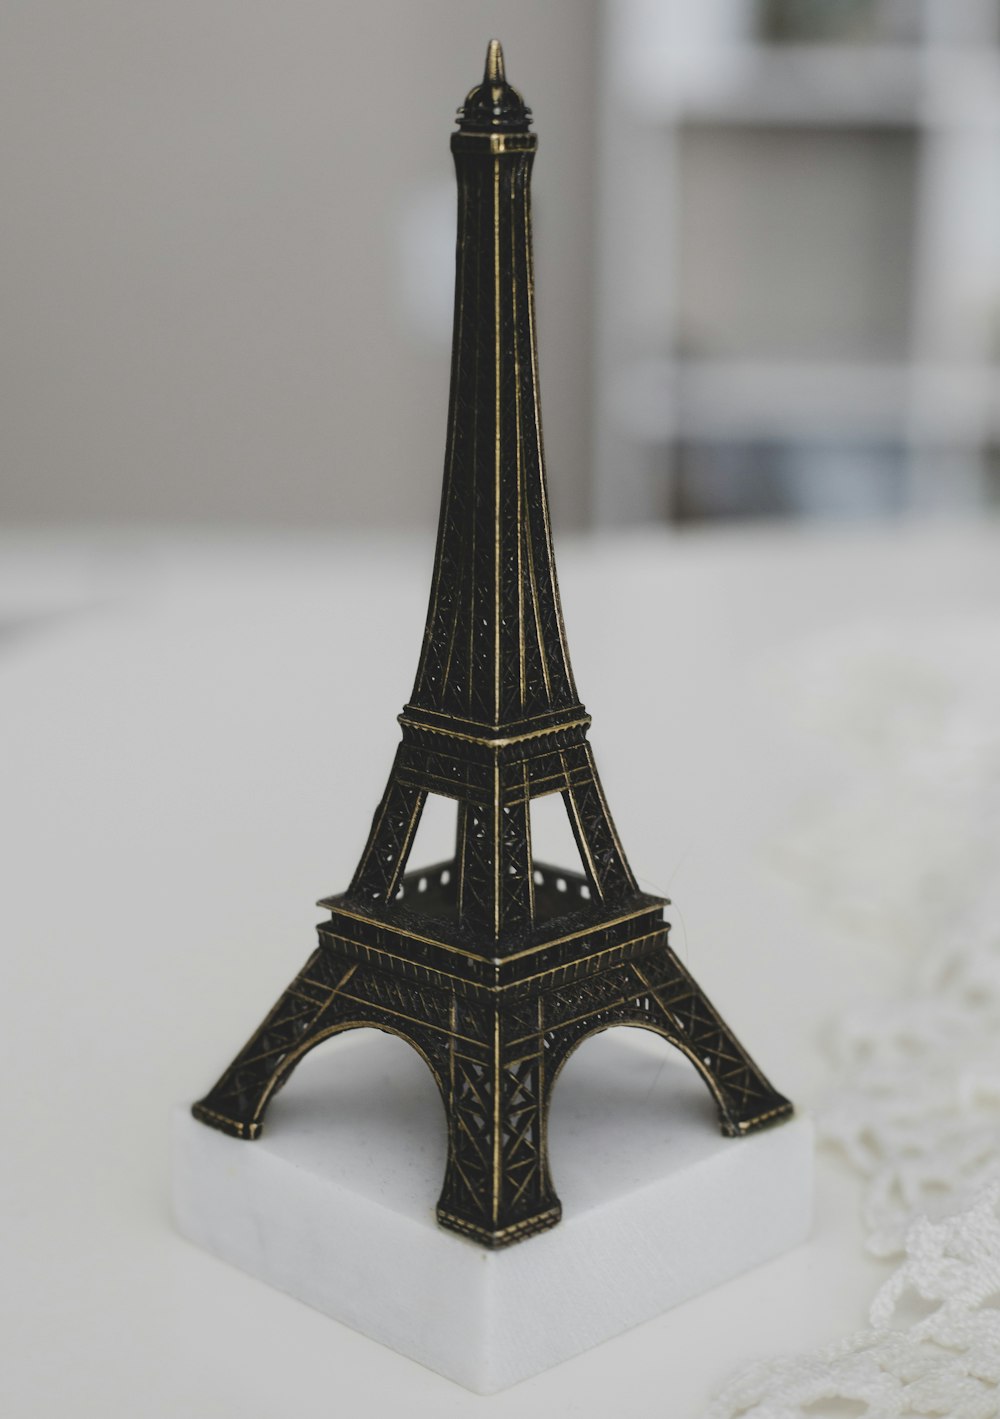 Eiffel Tower miniature on white surface